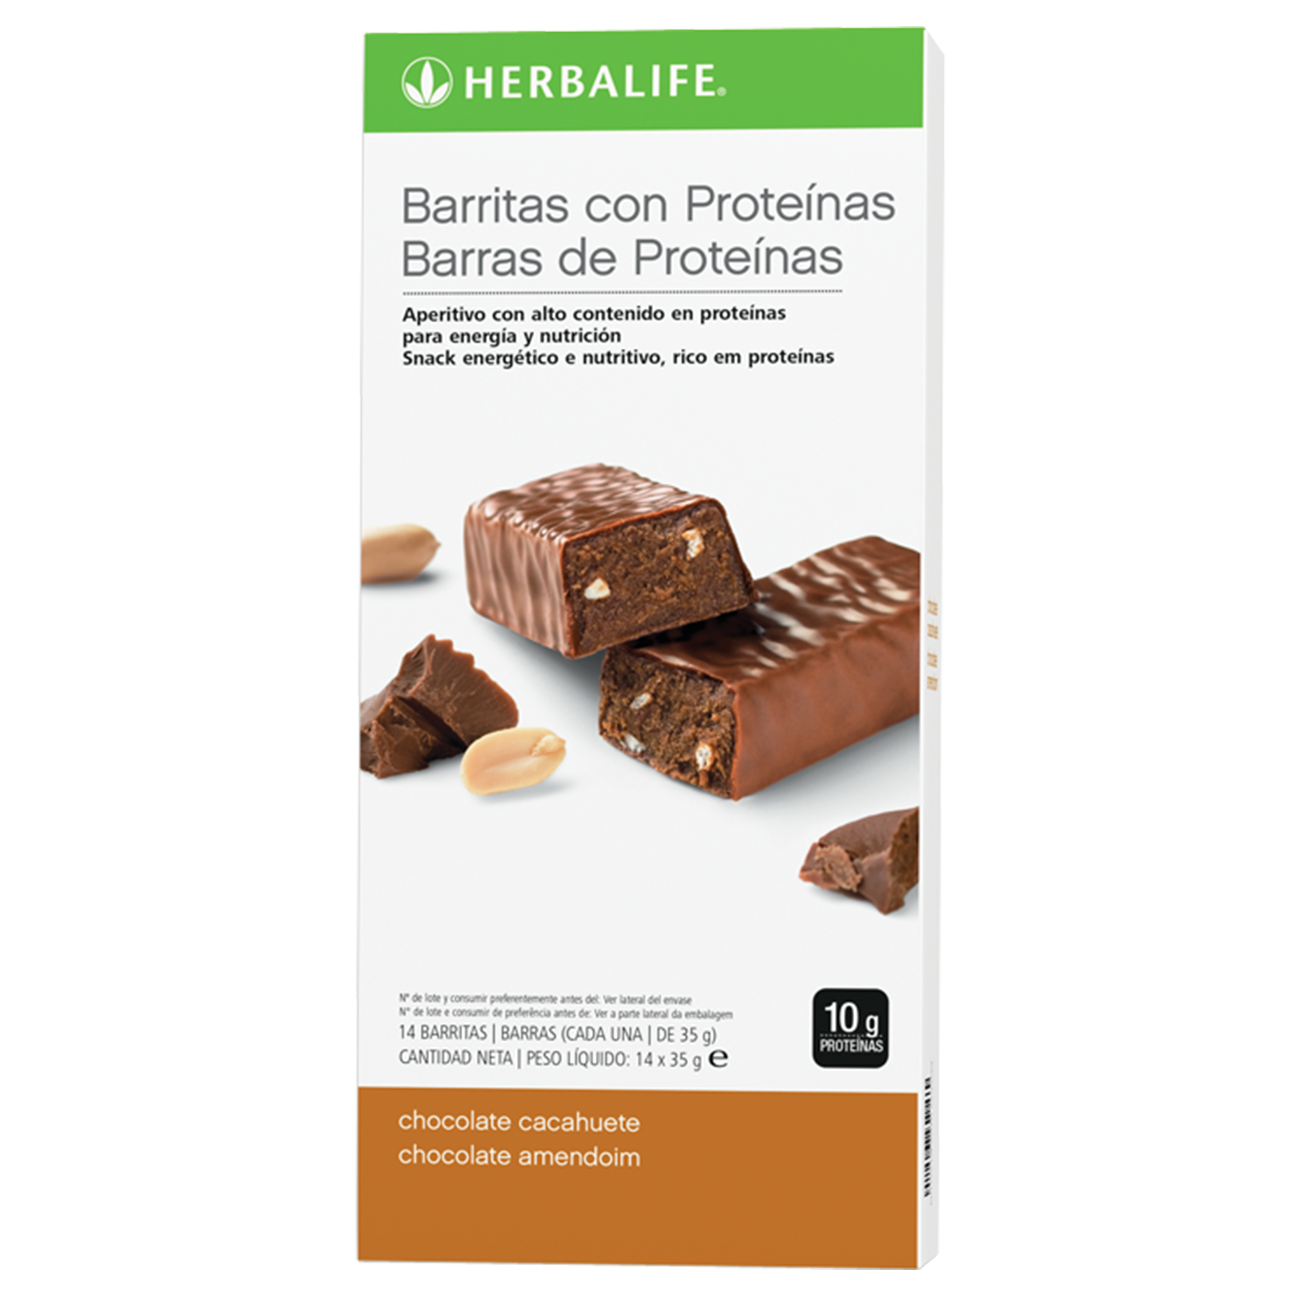 Barras de Proteínas Snack de Proteínas Chocolate Amendoim product shot